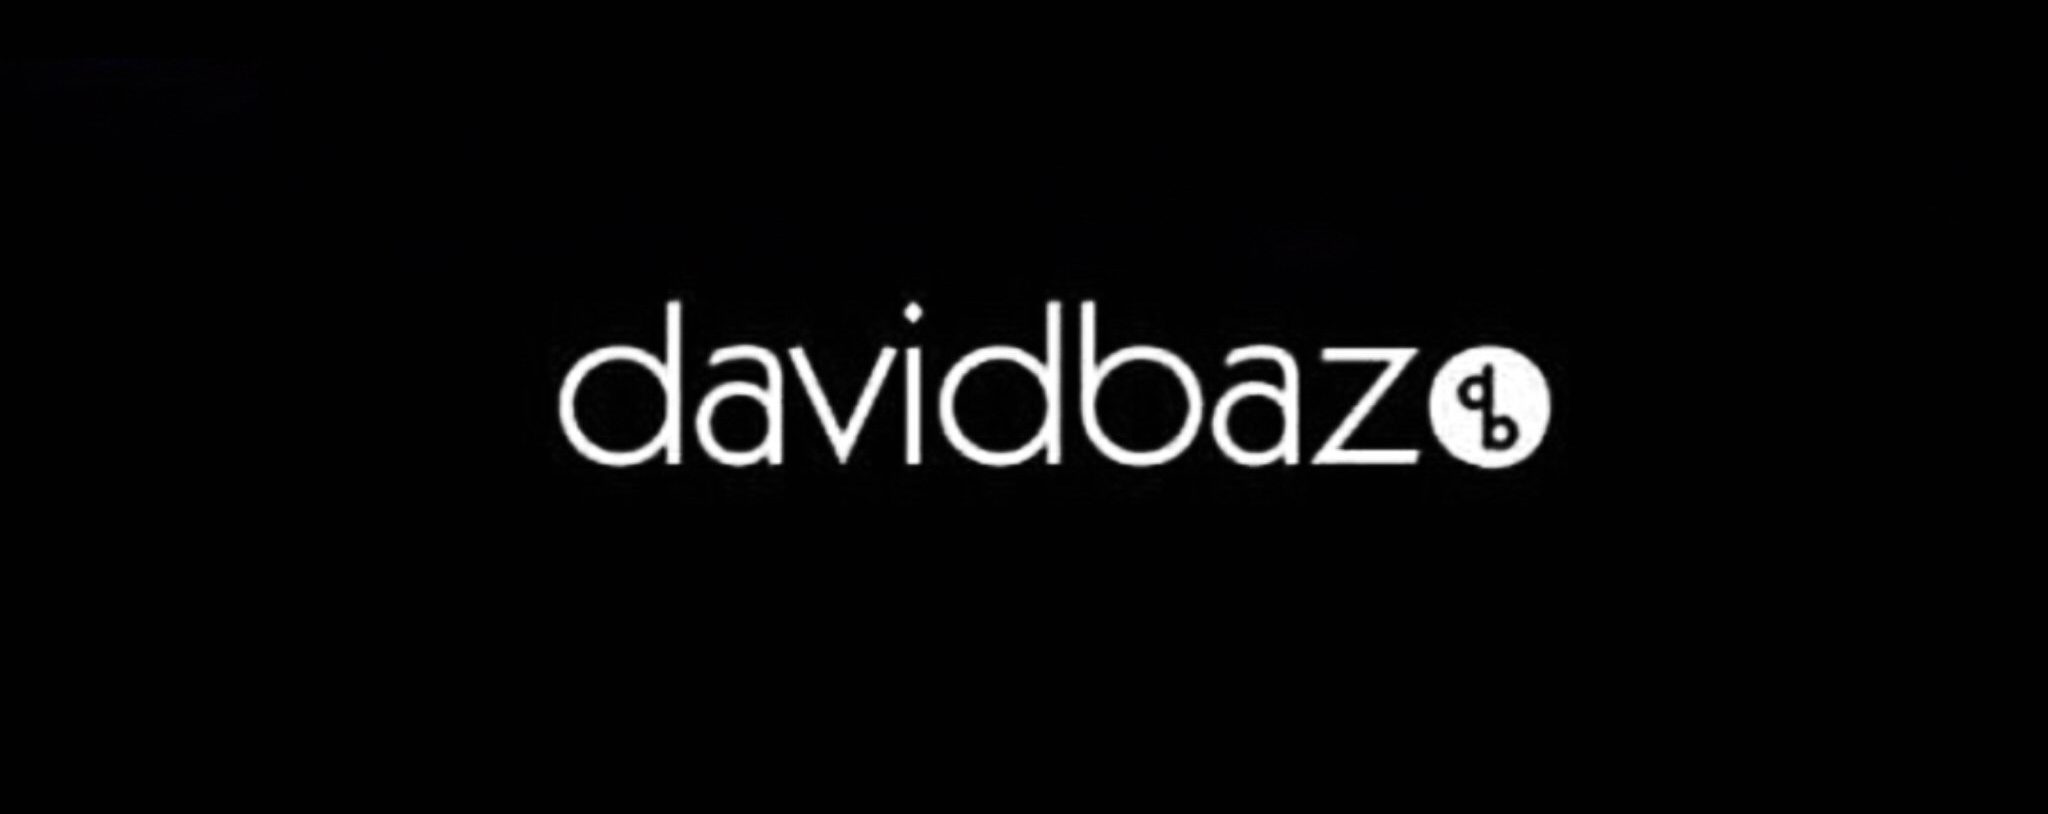 David Bazo Twitter Logo.